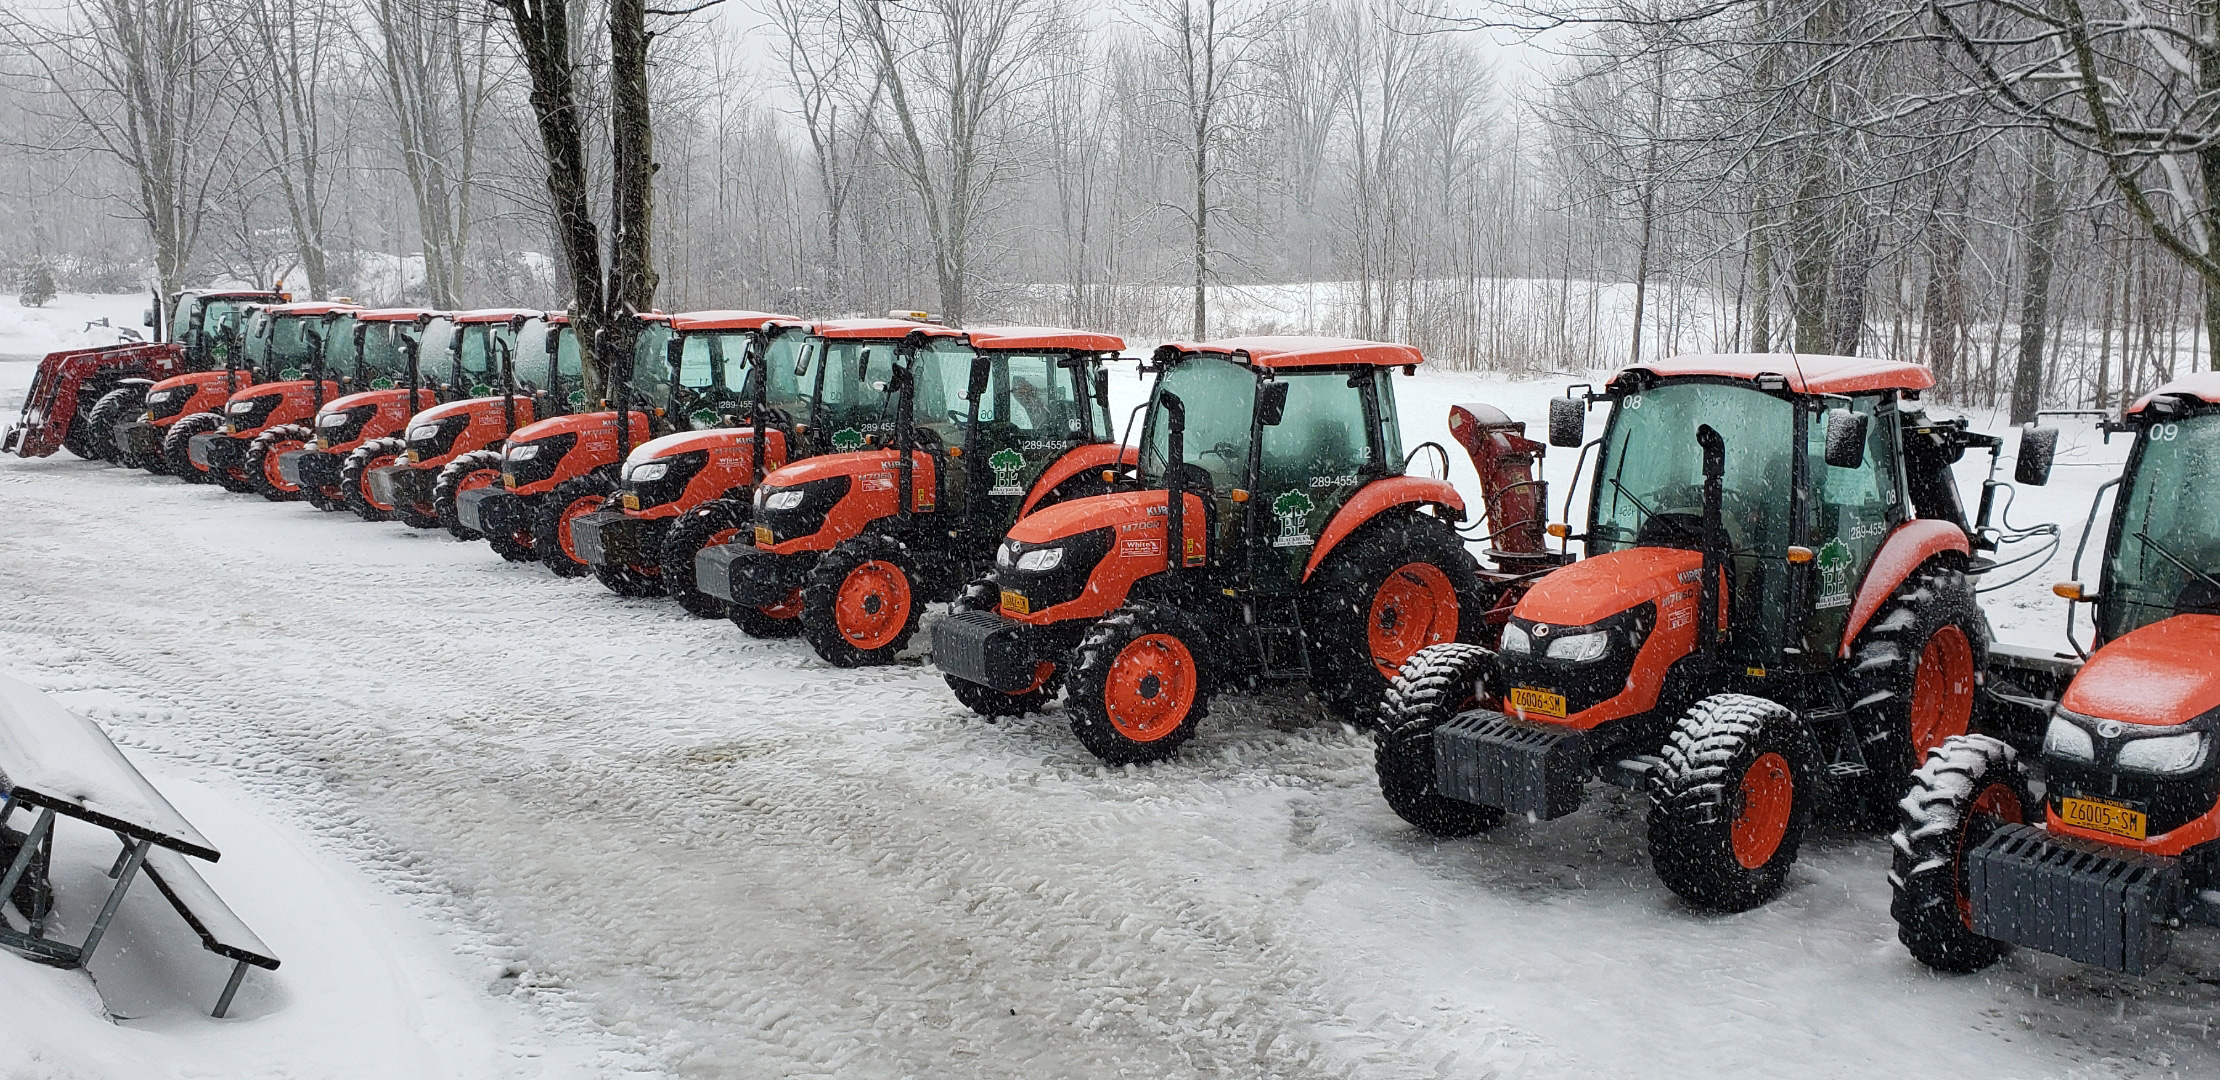 Let us snowblow your drive this winter!